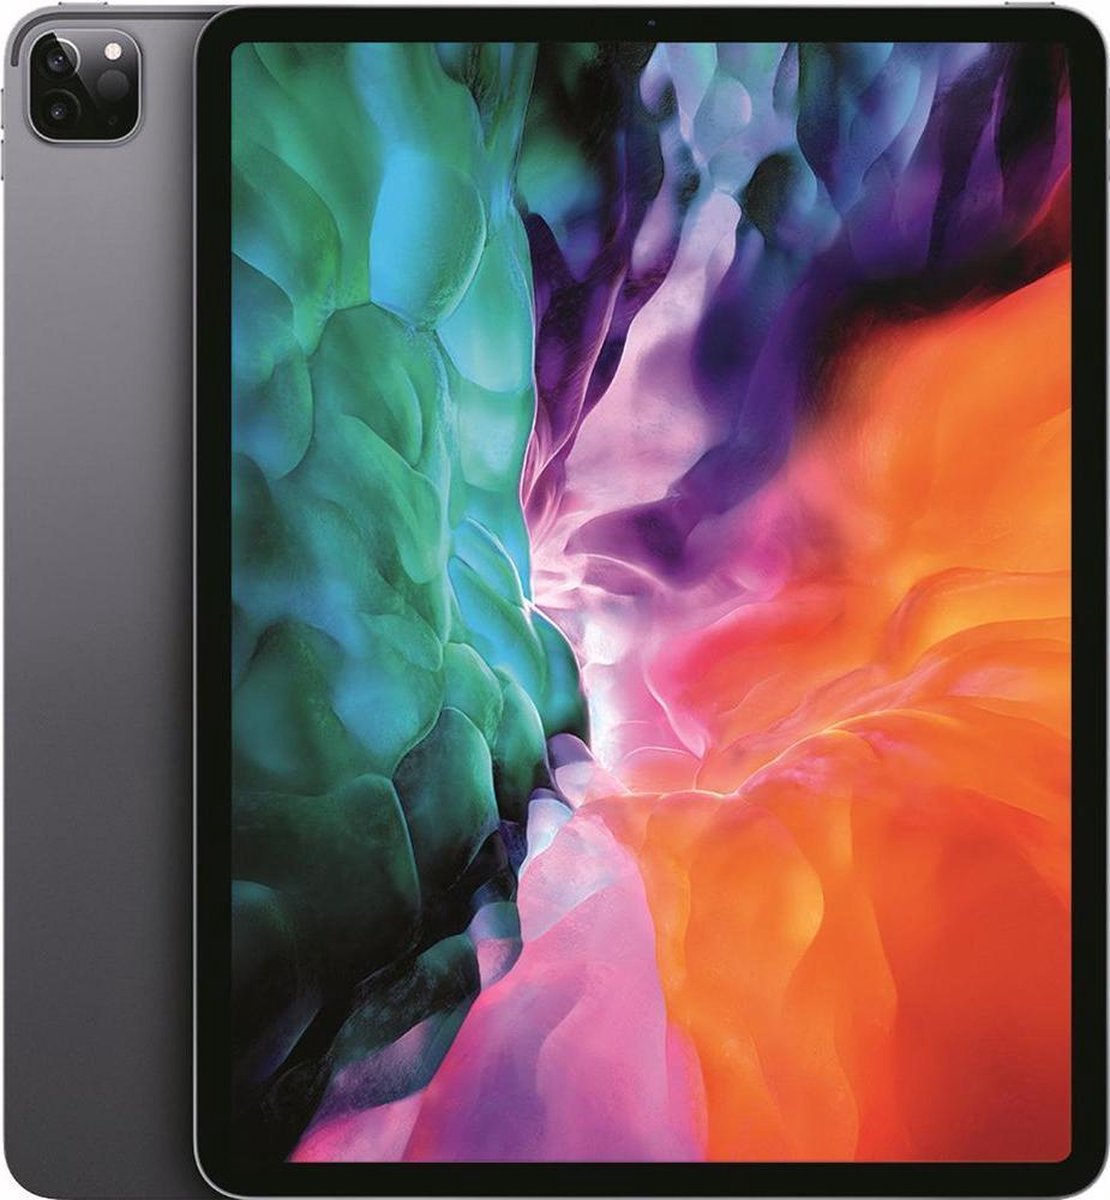 Apple iPad Pro (2020) - 12.9 inch - WiFi - 256GB - Spacegrijs (0190199416840)